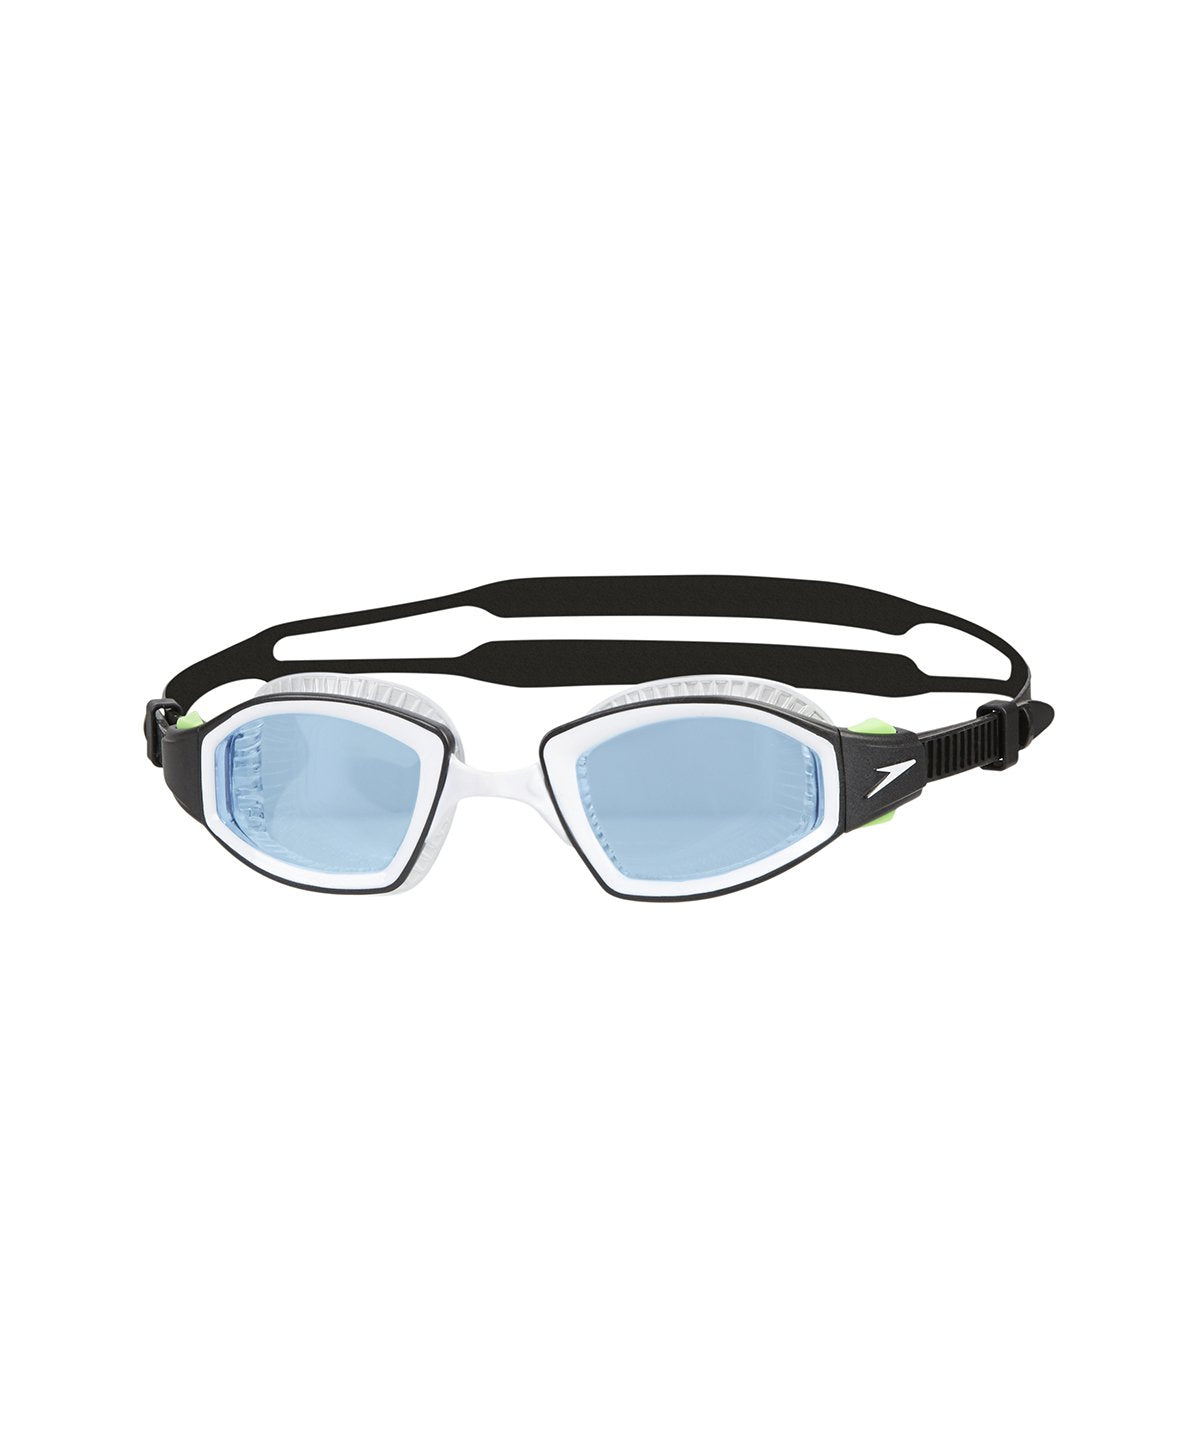 Speedo Unisex-Adult Futura Biofuse Pro Goggles (Blue/Black) - Best Price online Prokicksports.com